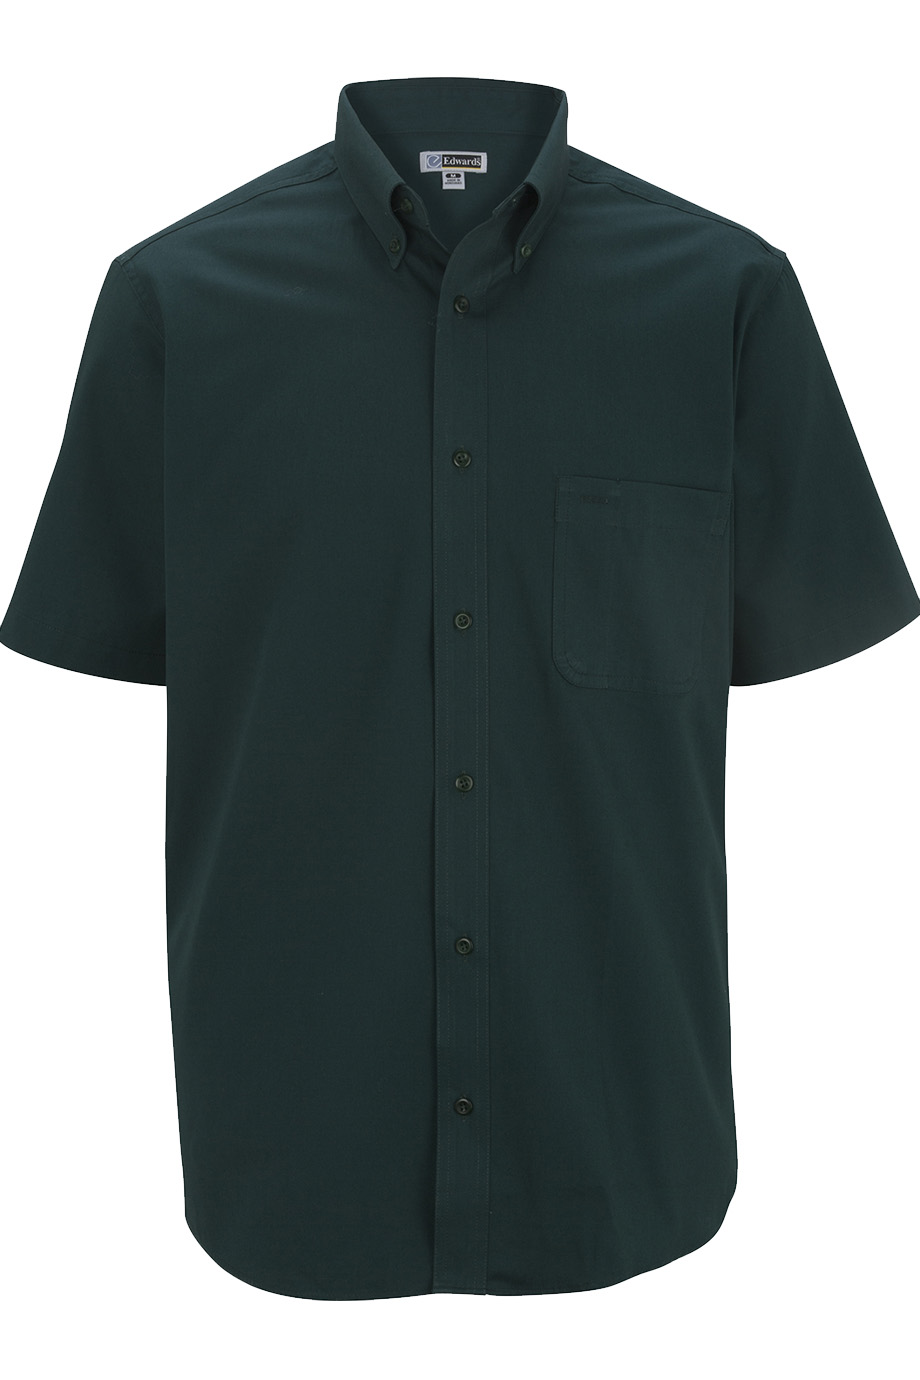 Men's Cottonplus Short Sleeve Twill Shirt 1740